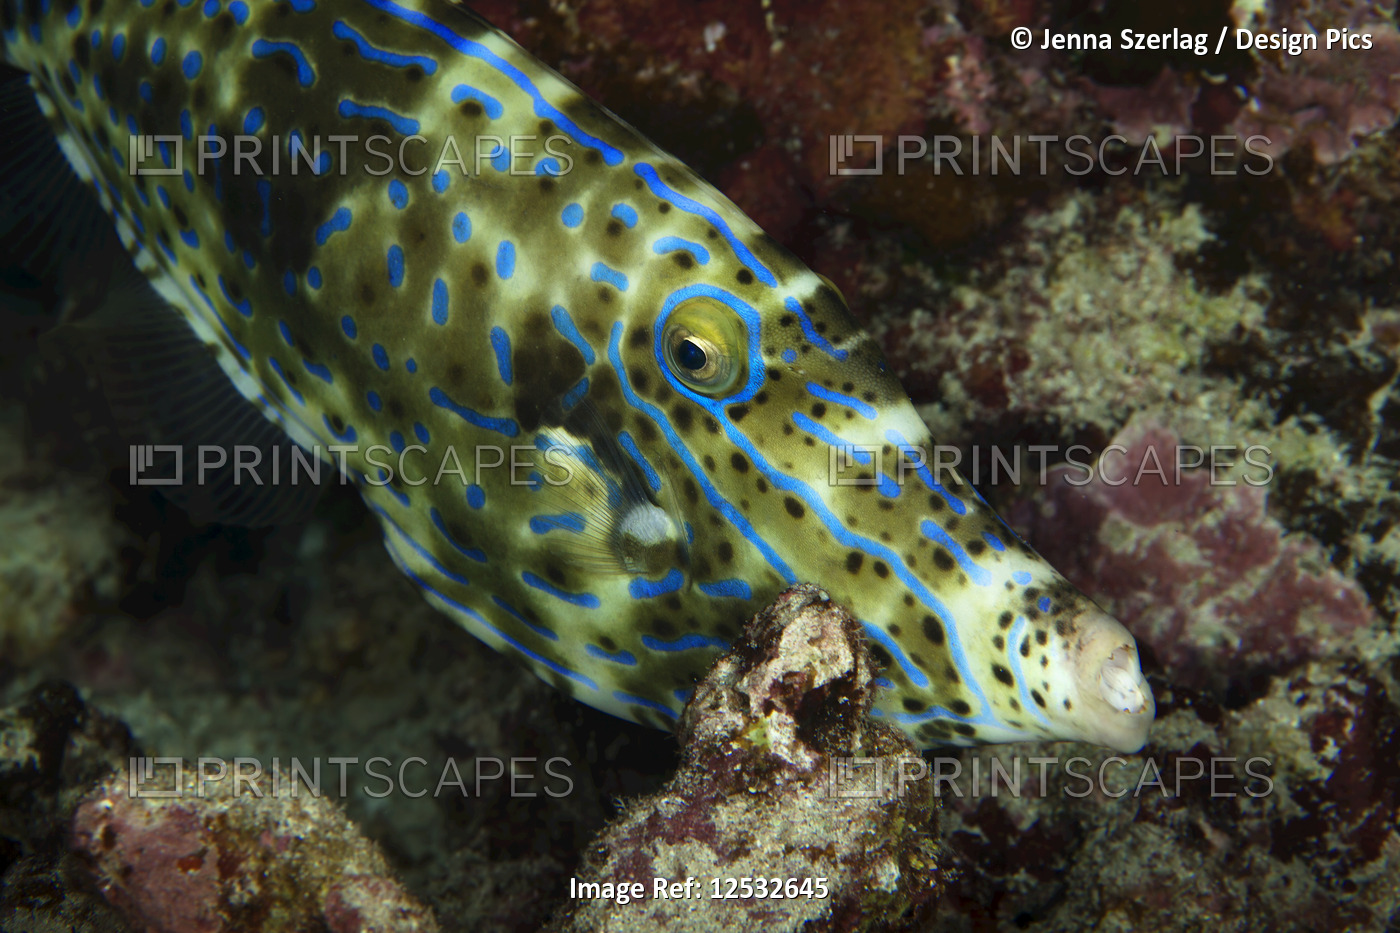 Filefish (Monacanthidae); Island of Hawaii, Hawaii, United States of America